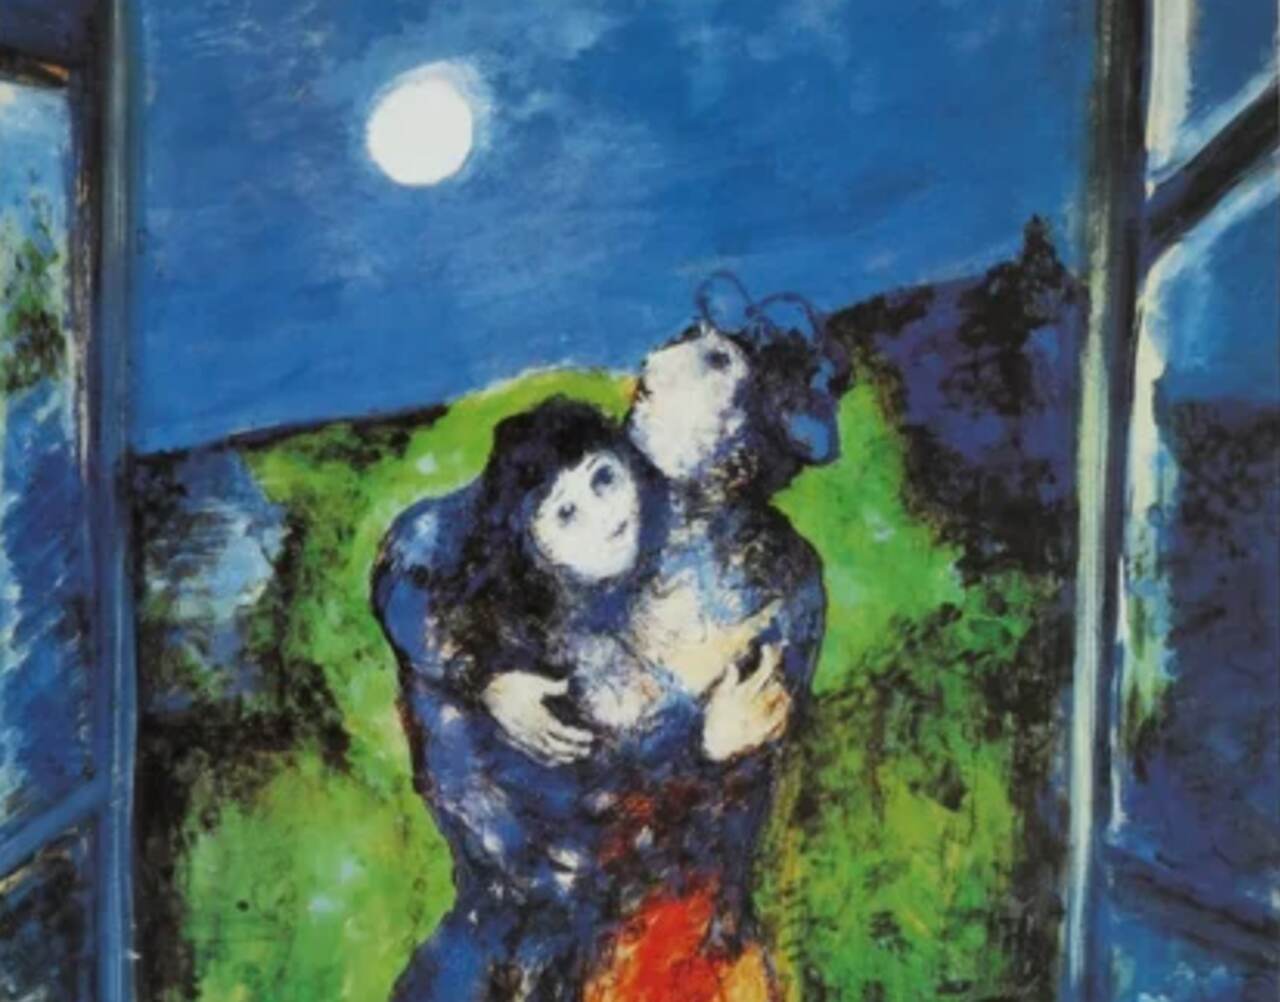 Pintura "Lovers in the Moonlight", de Marc Chagall. Ilustrando o poema "Noite de Amor", de Castro Alves.